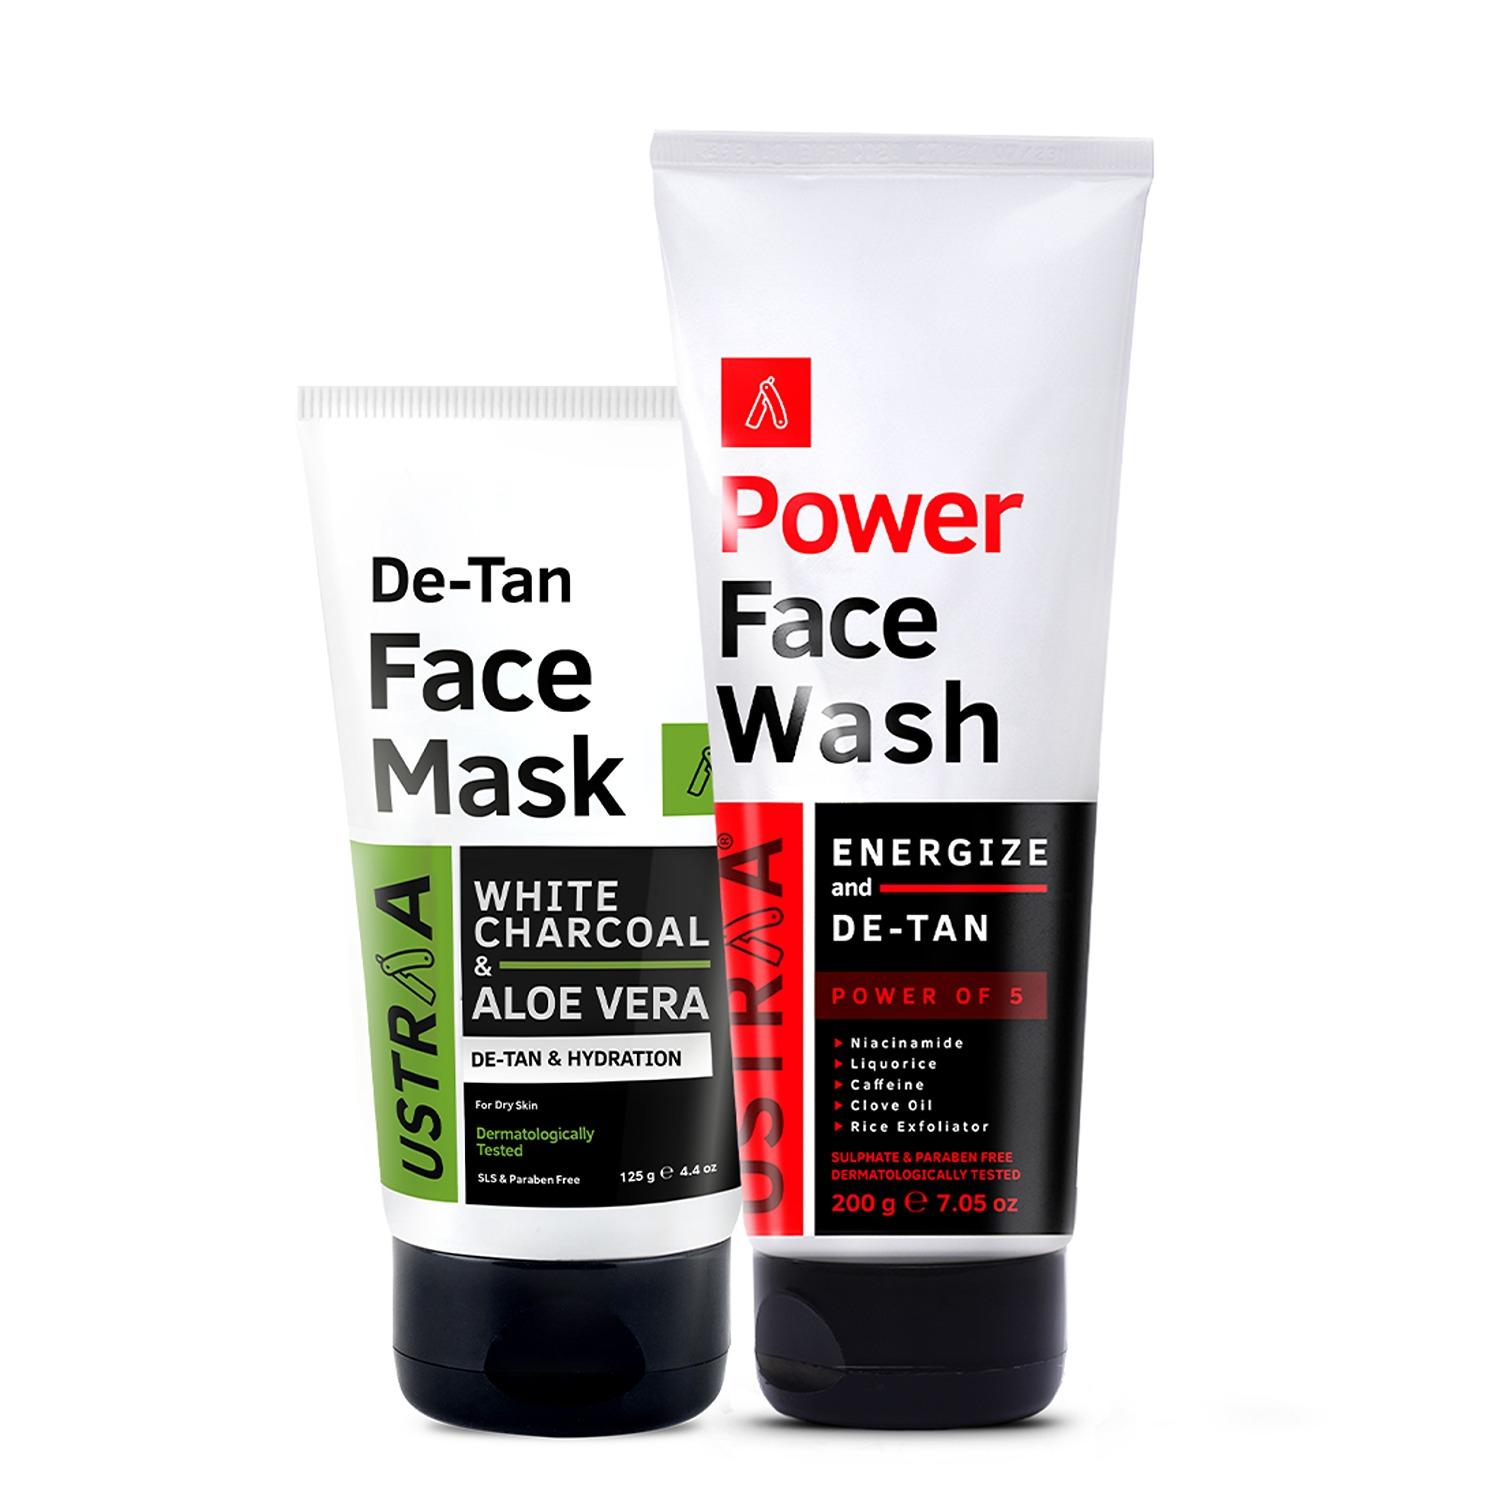 Ustraa | Ustraa Power Face Wash De-Tan & De-Tan Face Mask Dry Skin